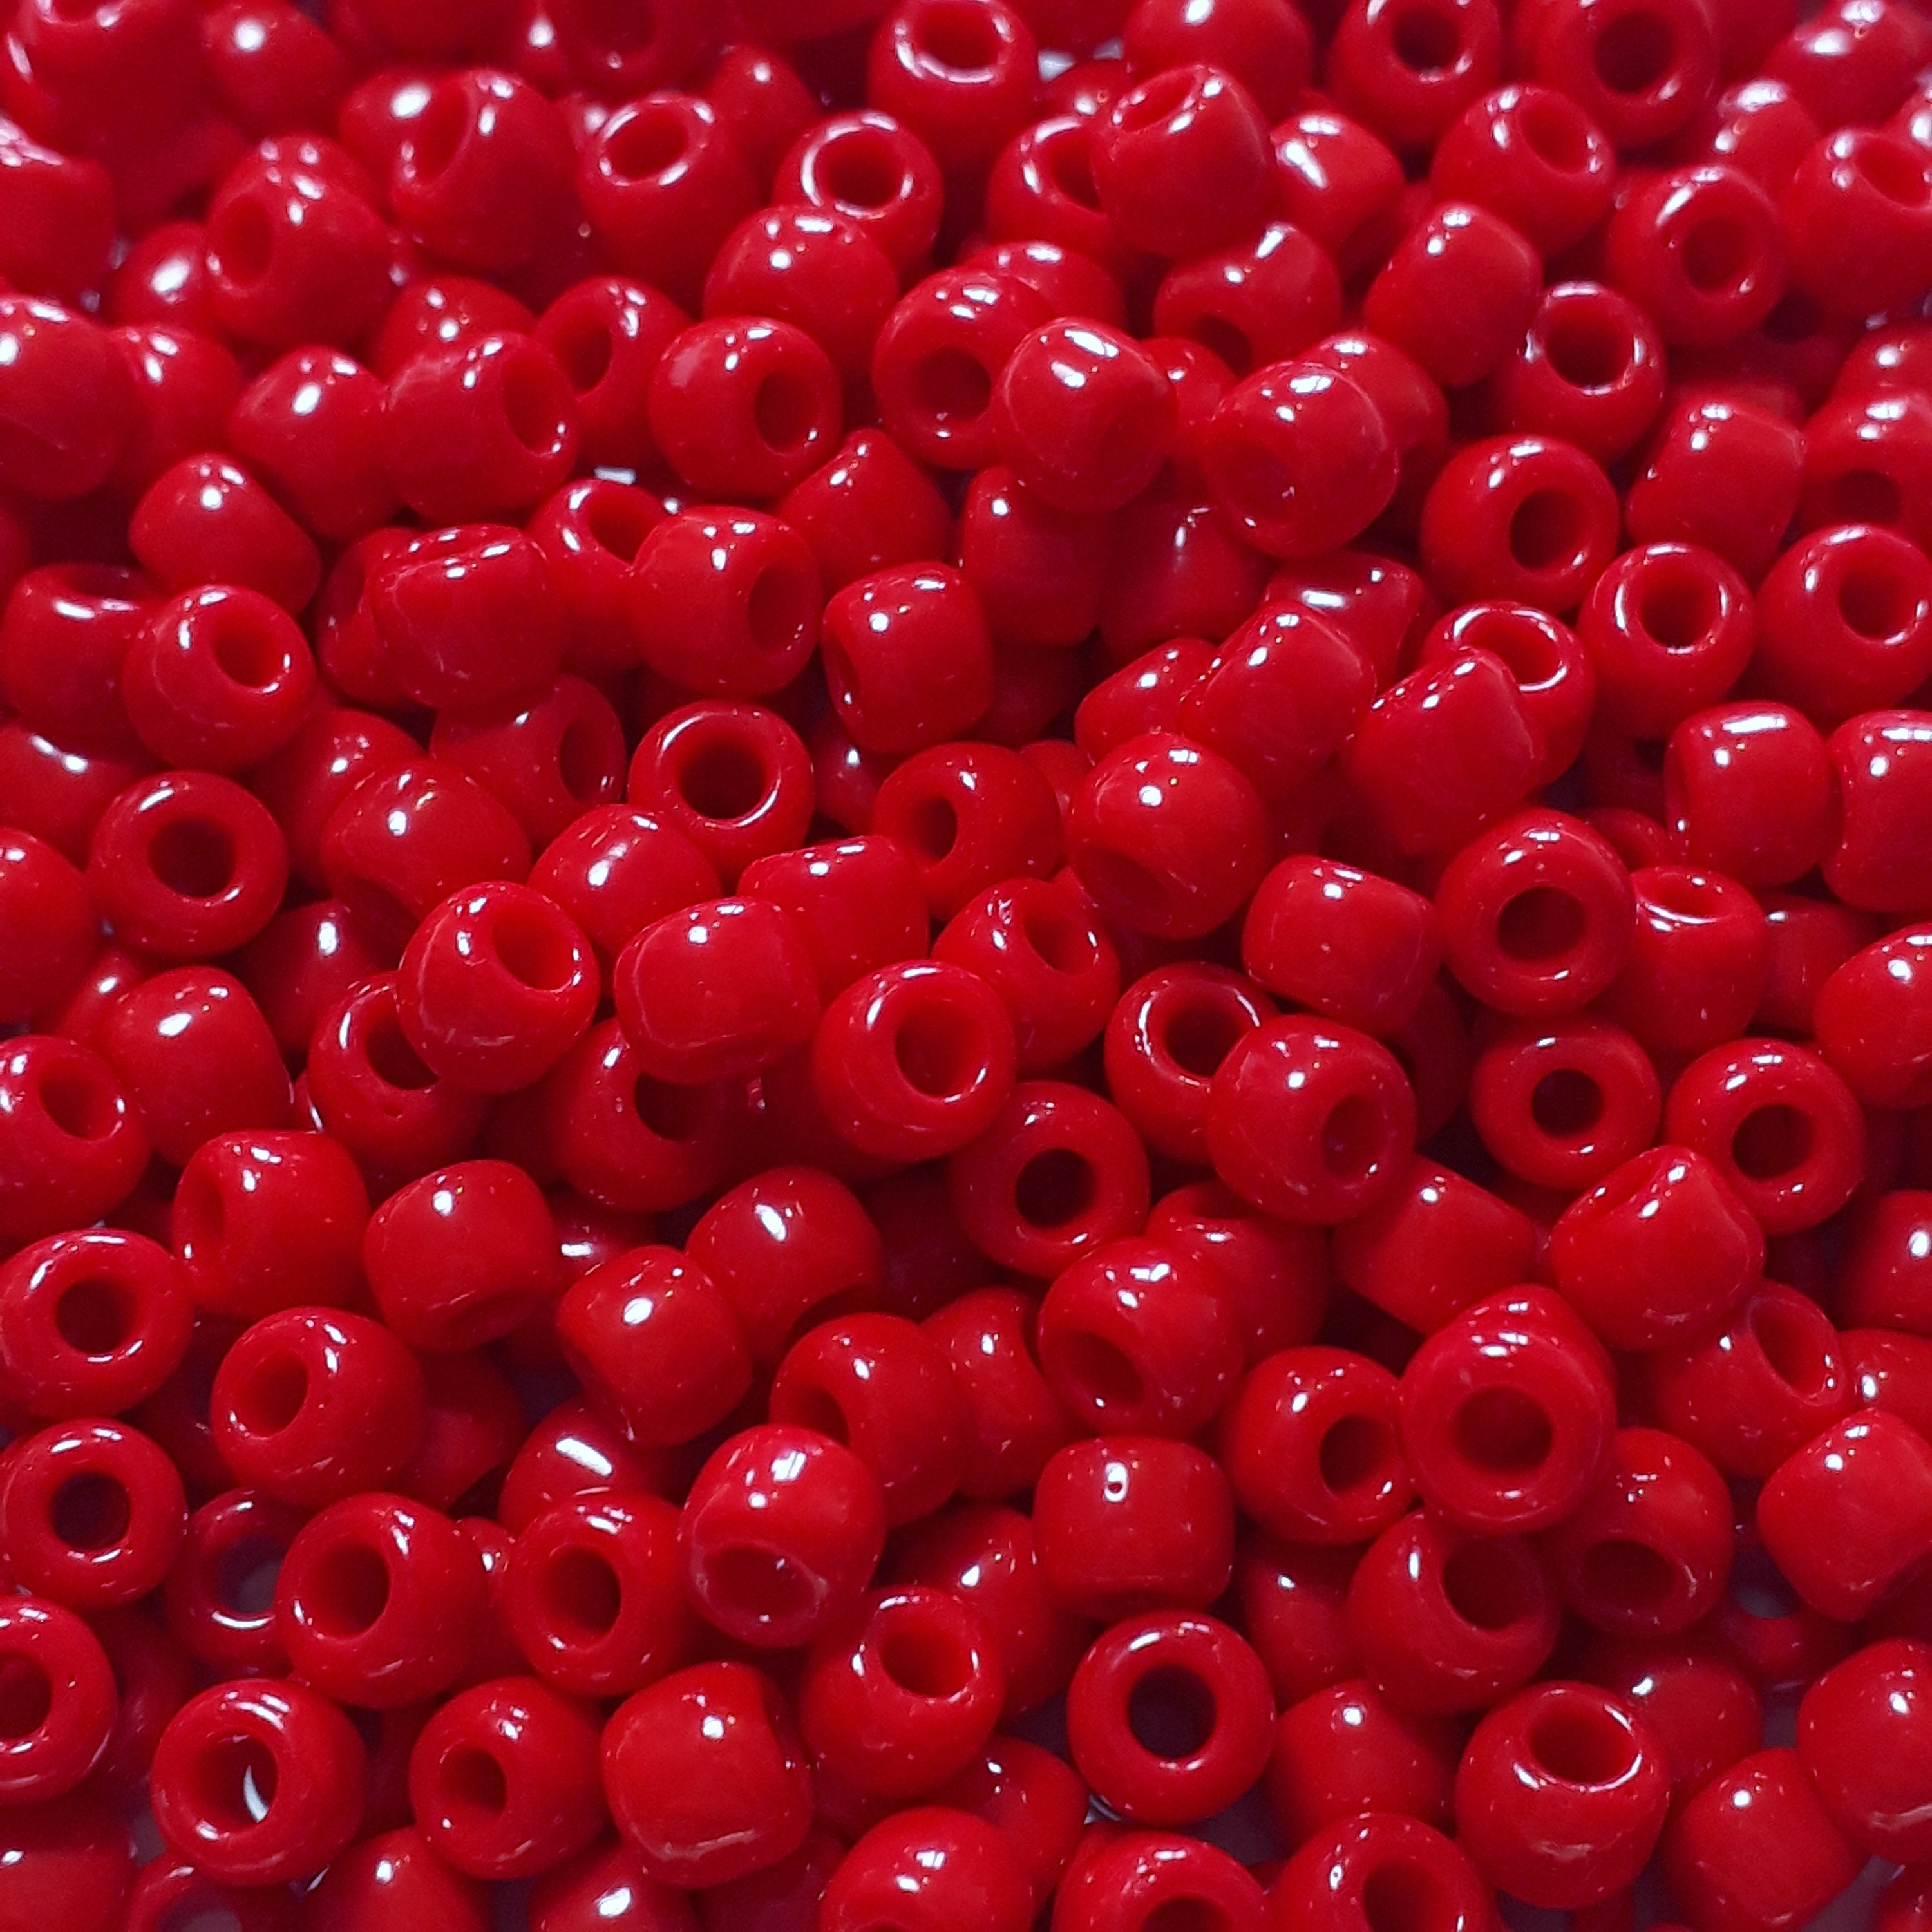 Czech Seed Beads Size 6/0 - Opaque Medium Cherry Red (Approx